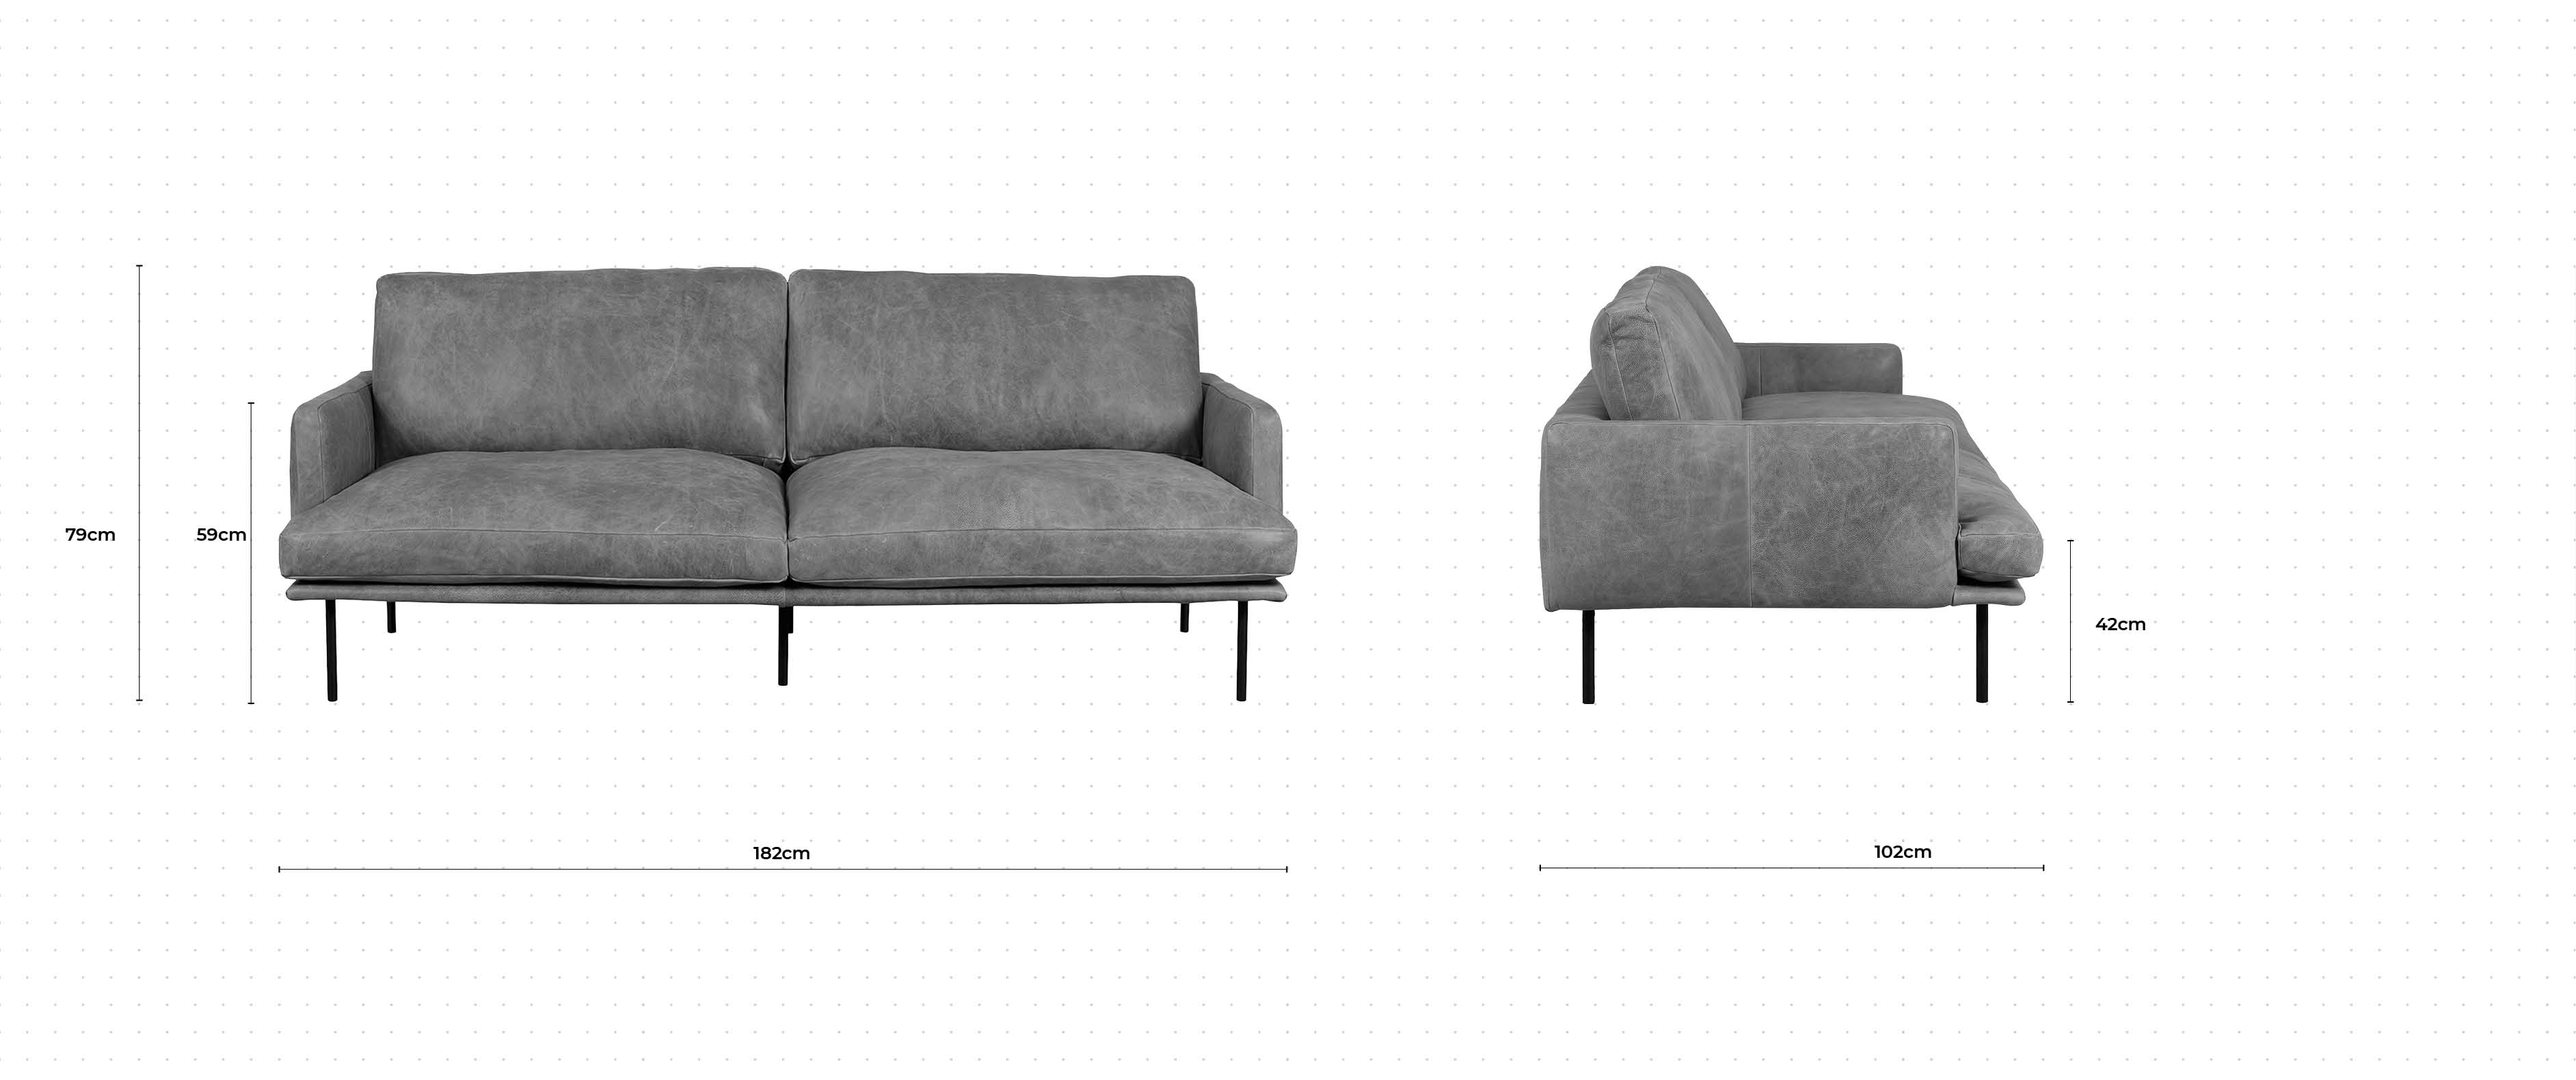 Crema 2 Seater Sofa dimensions